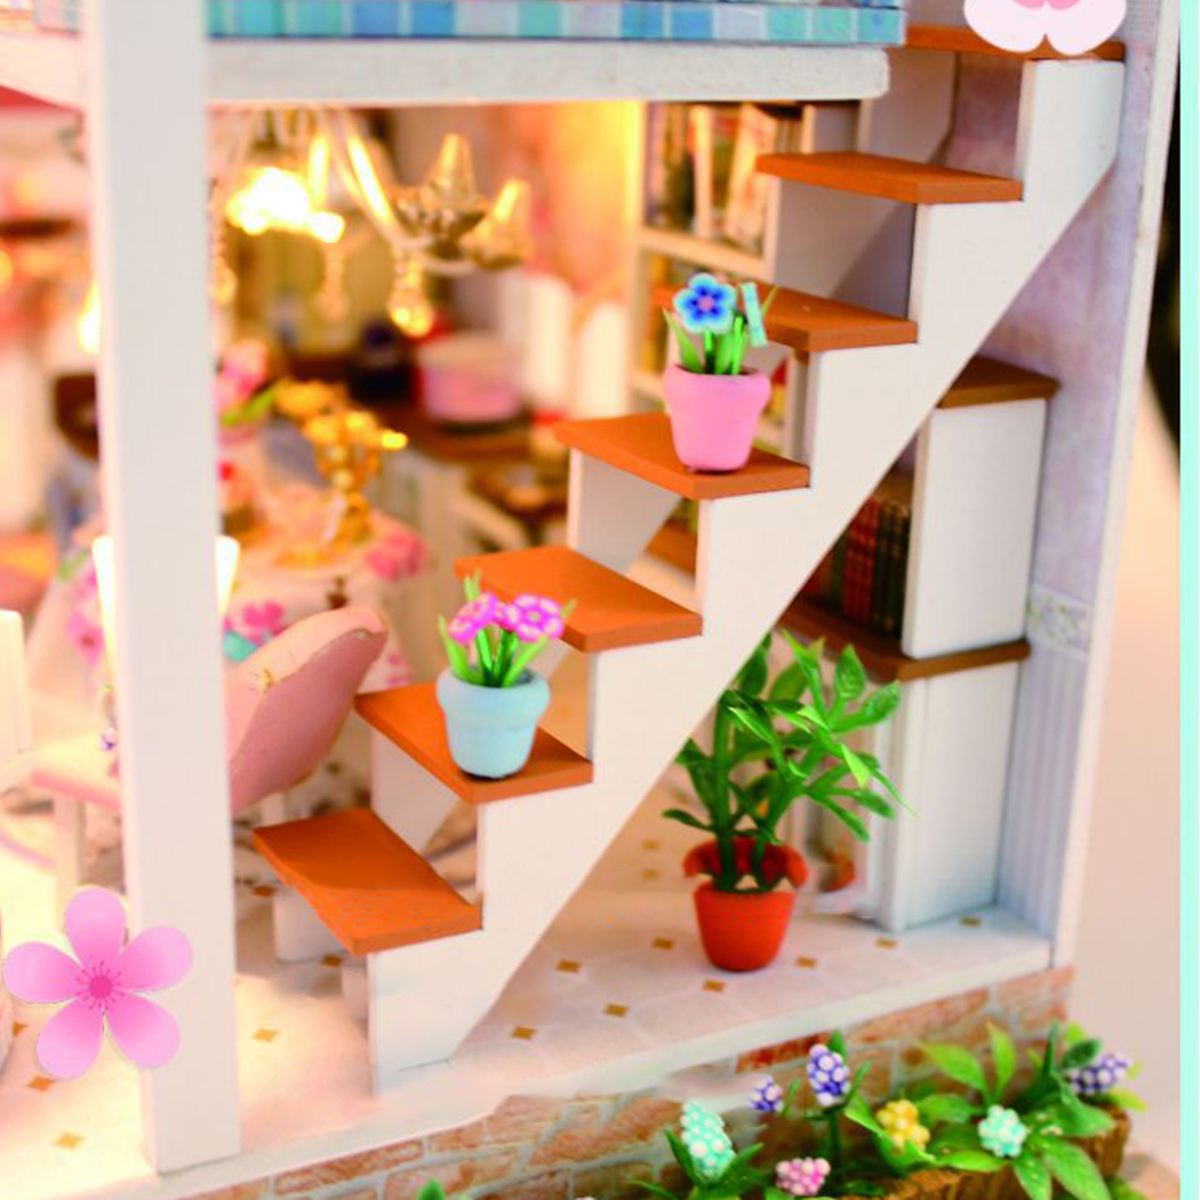 Hongda-DIY-Cabin-Hand-assembled-Doll-House-with-LED-Light-Home-Decor-Model-Toys-1616325-9